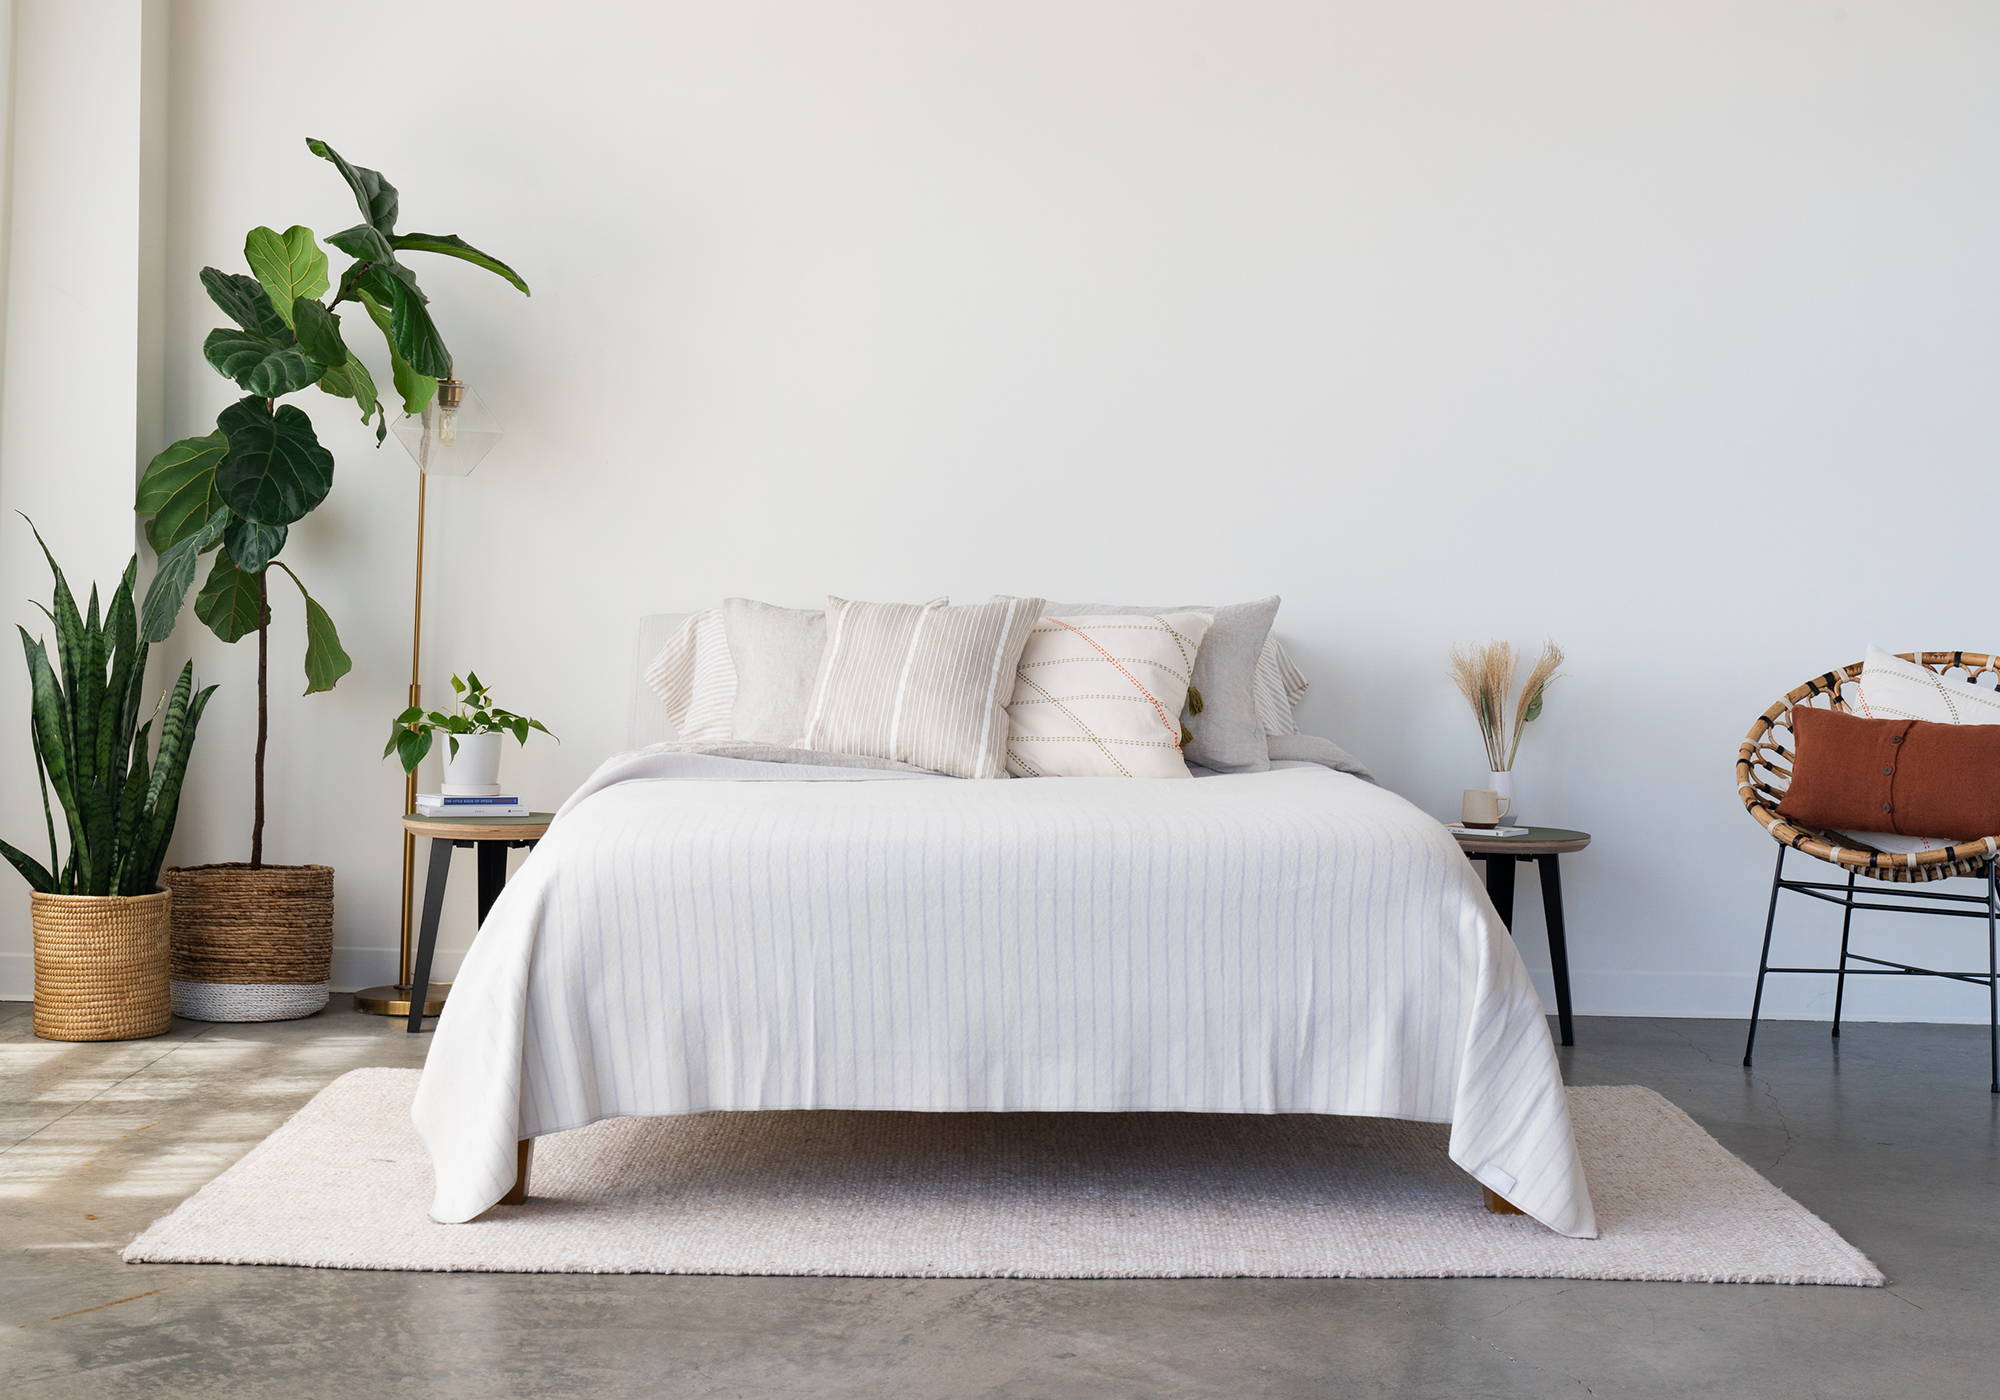 Bedroom with merino Wool Blanket on Bed